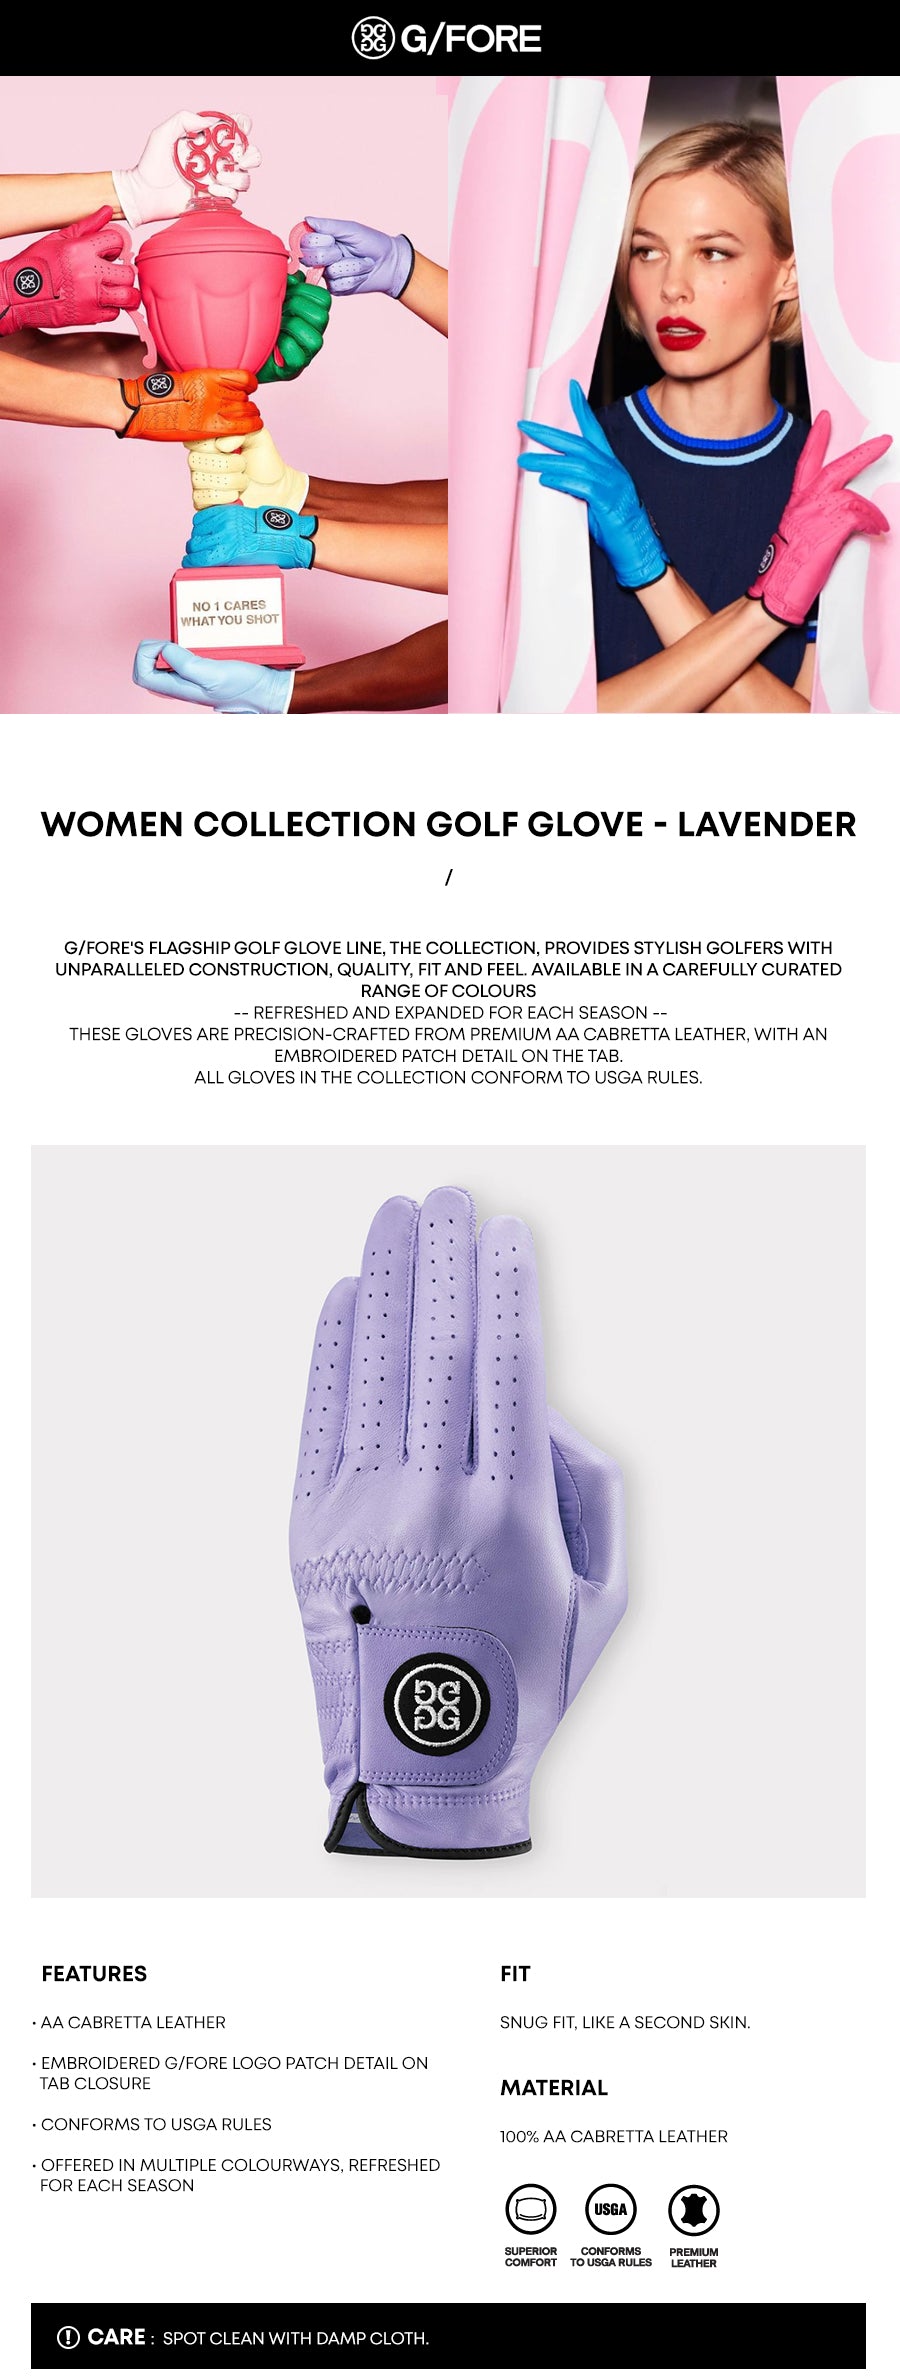 gfore-women-collection-golf-glove-lavender